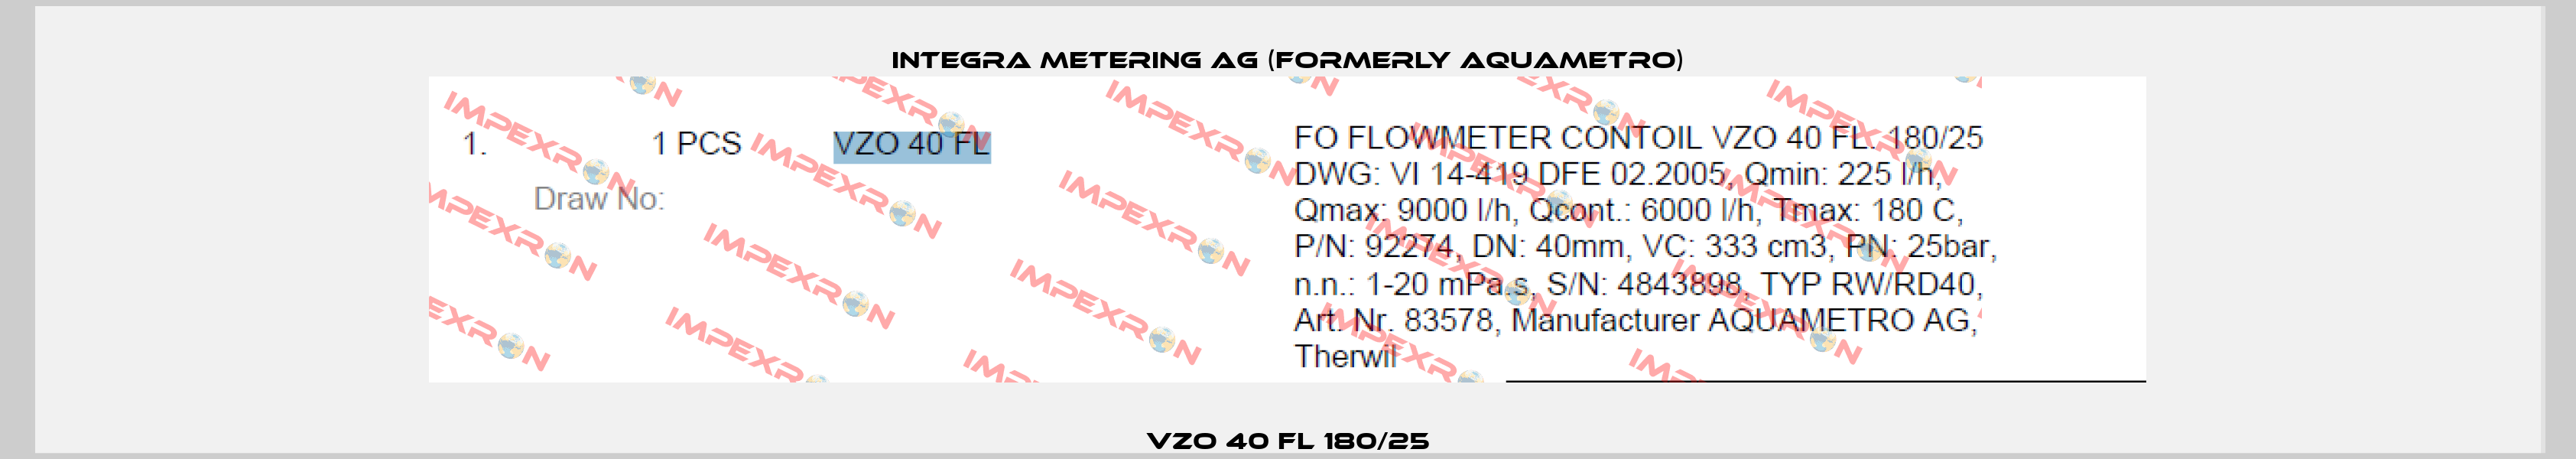 VZO 40 FL 180/25 Integra Metering AG (formerly Aquametro)